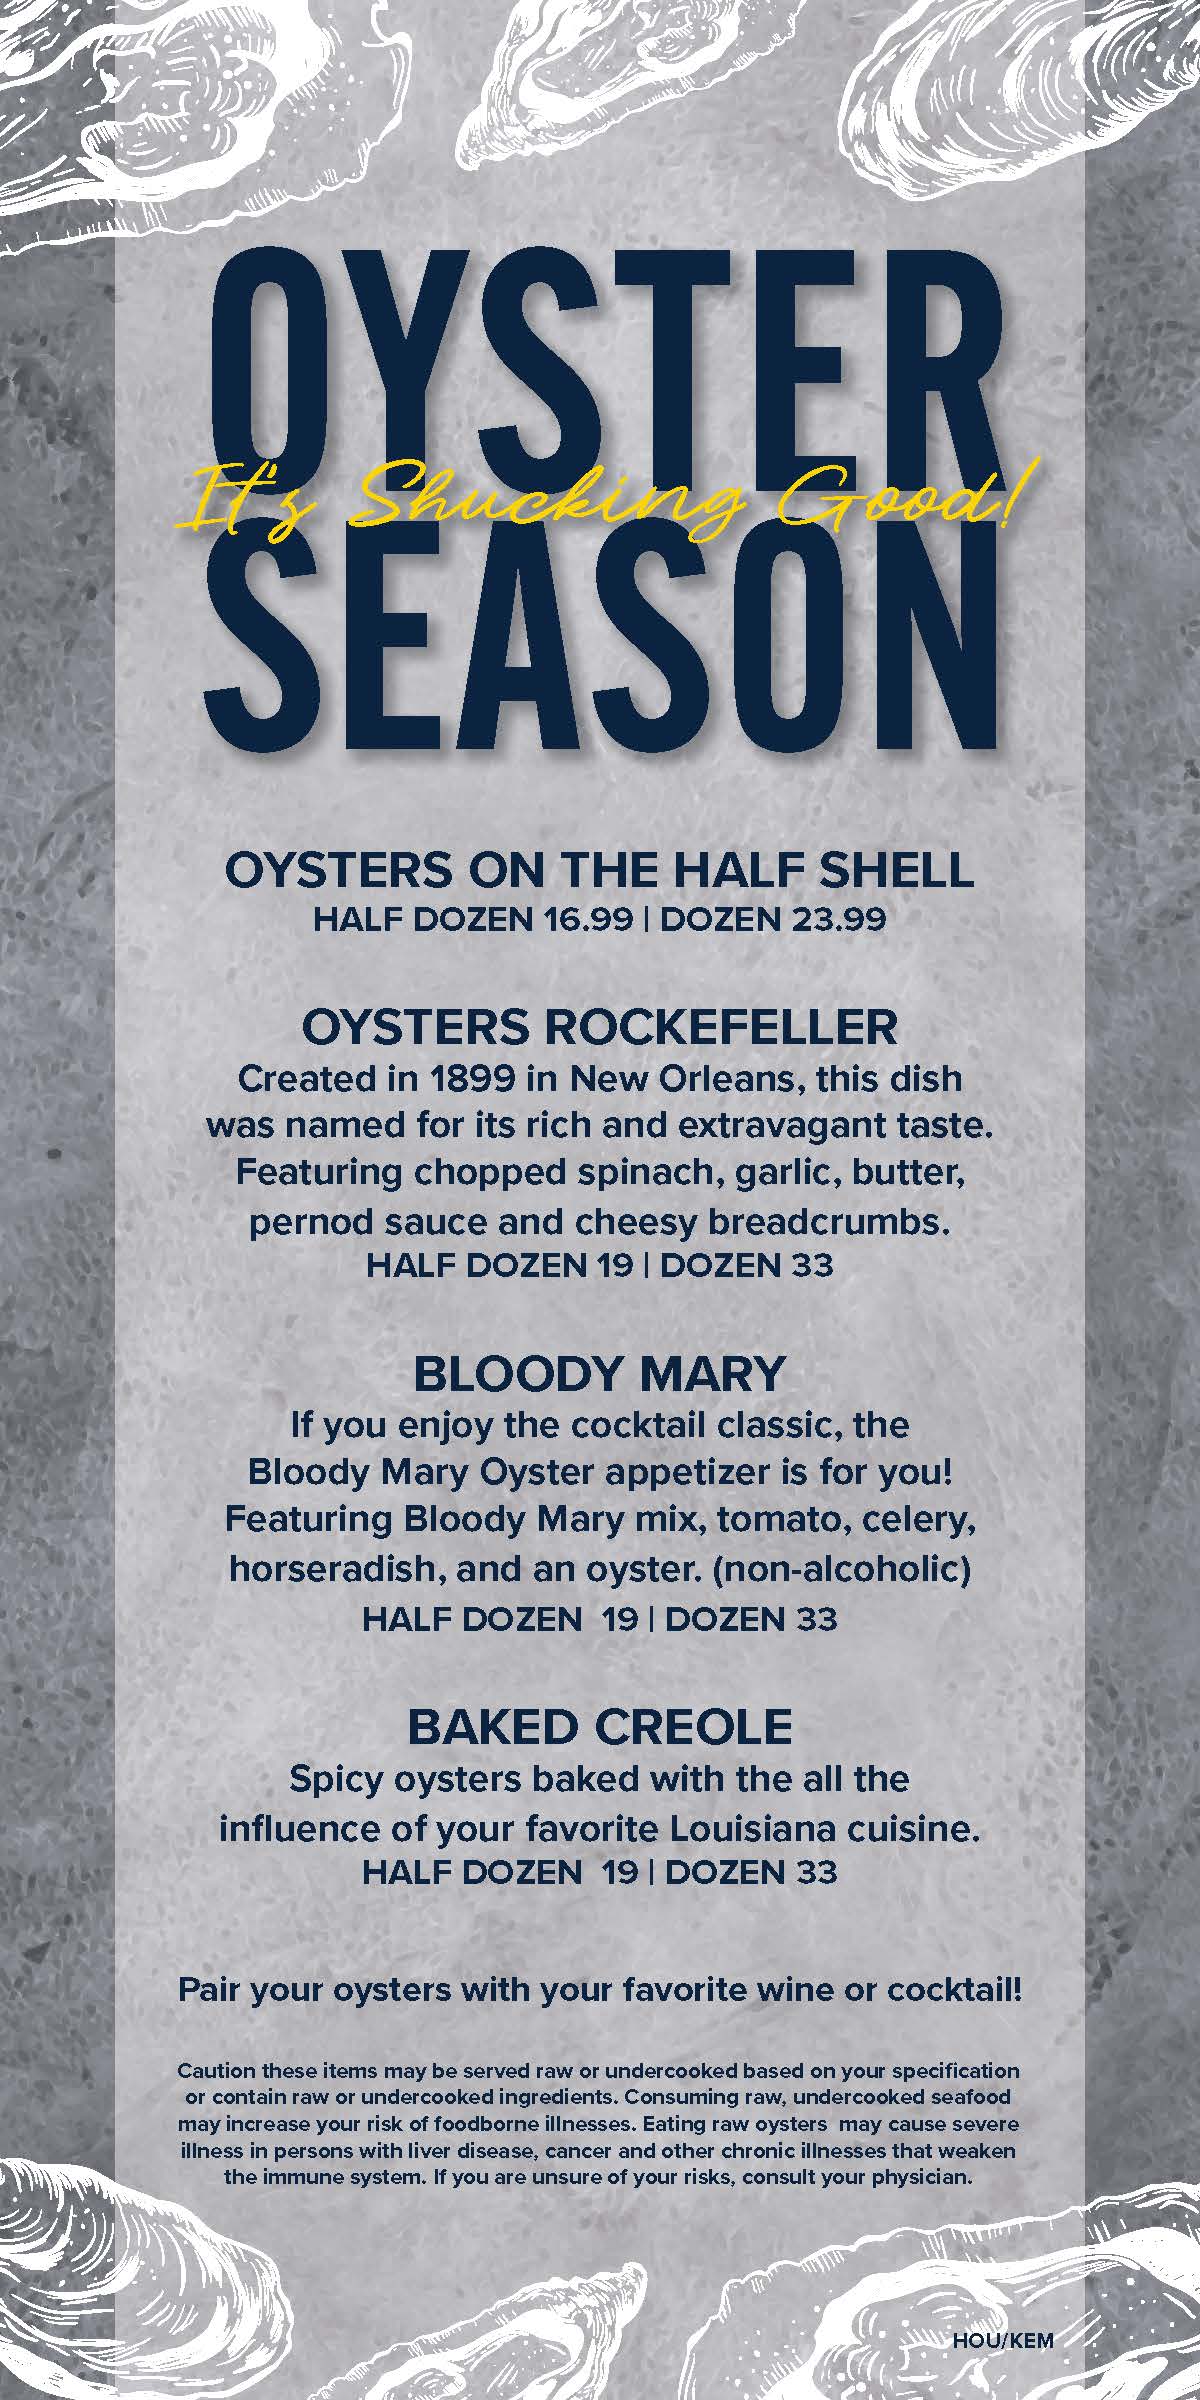 Oyster Season Promo